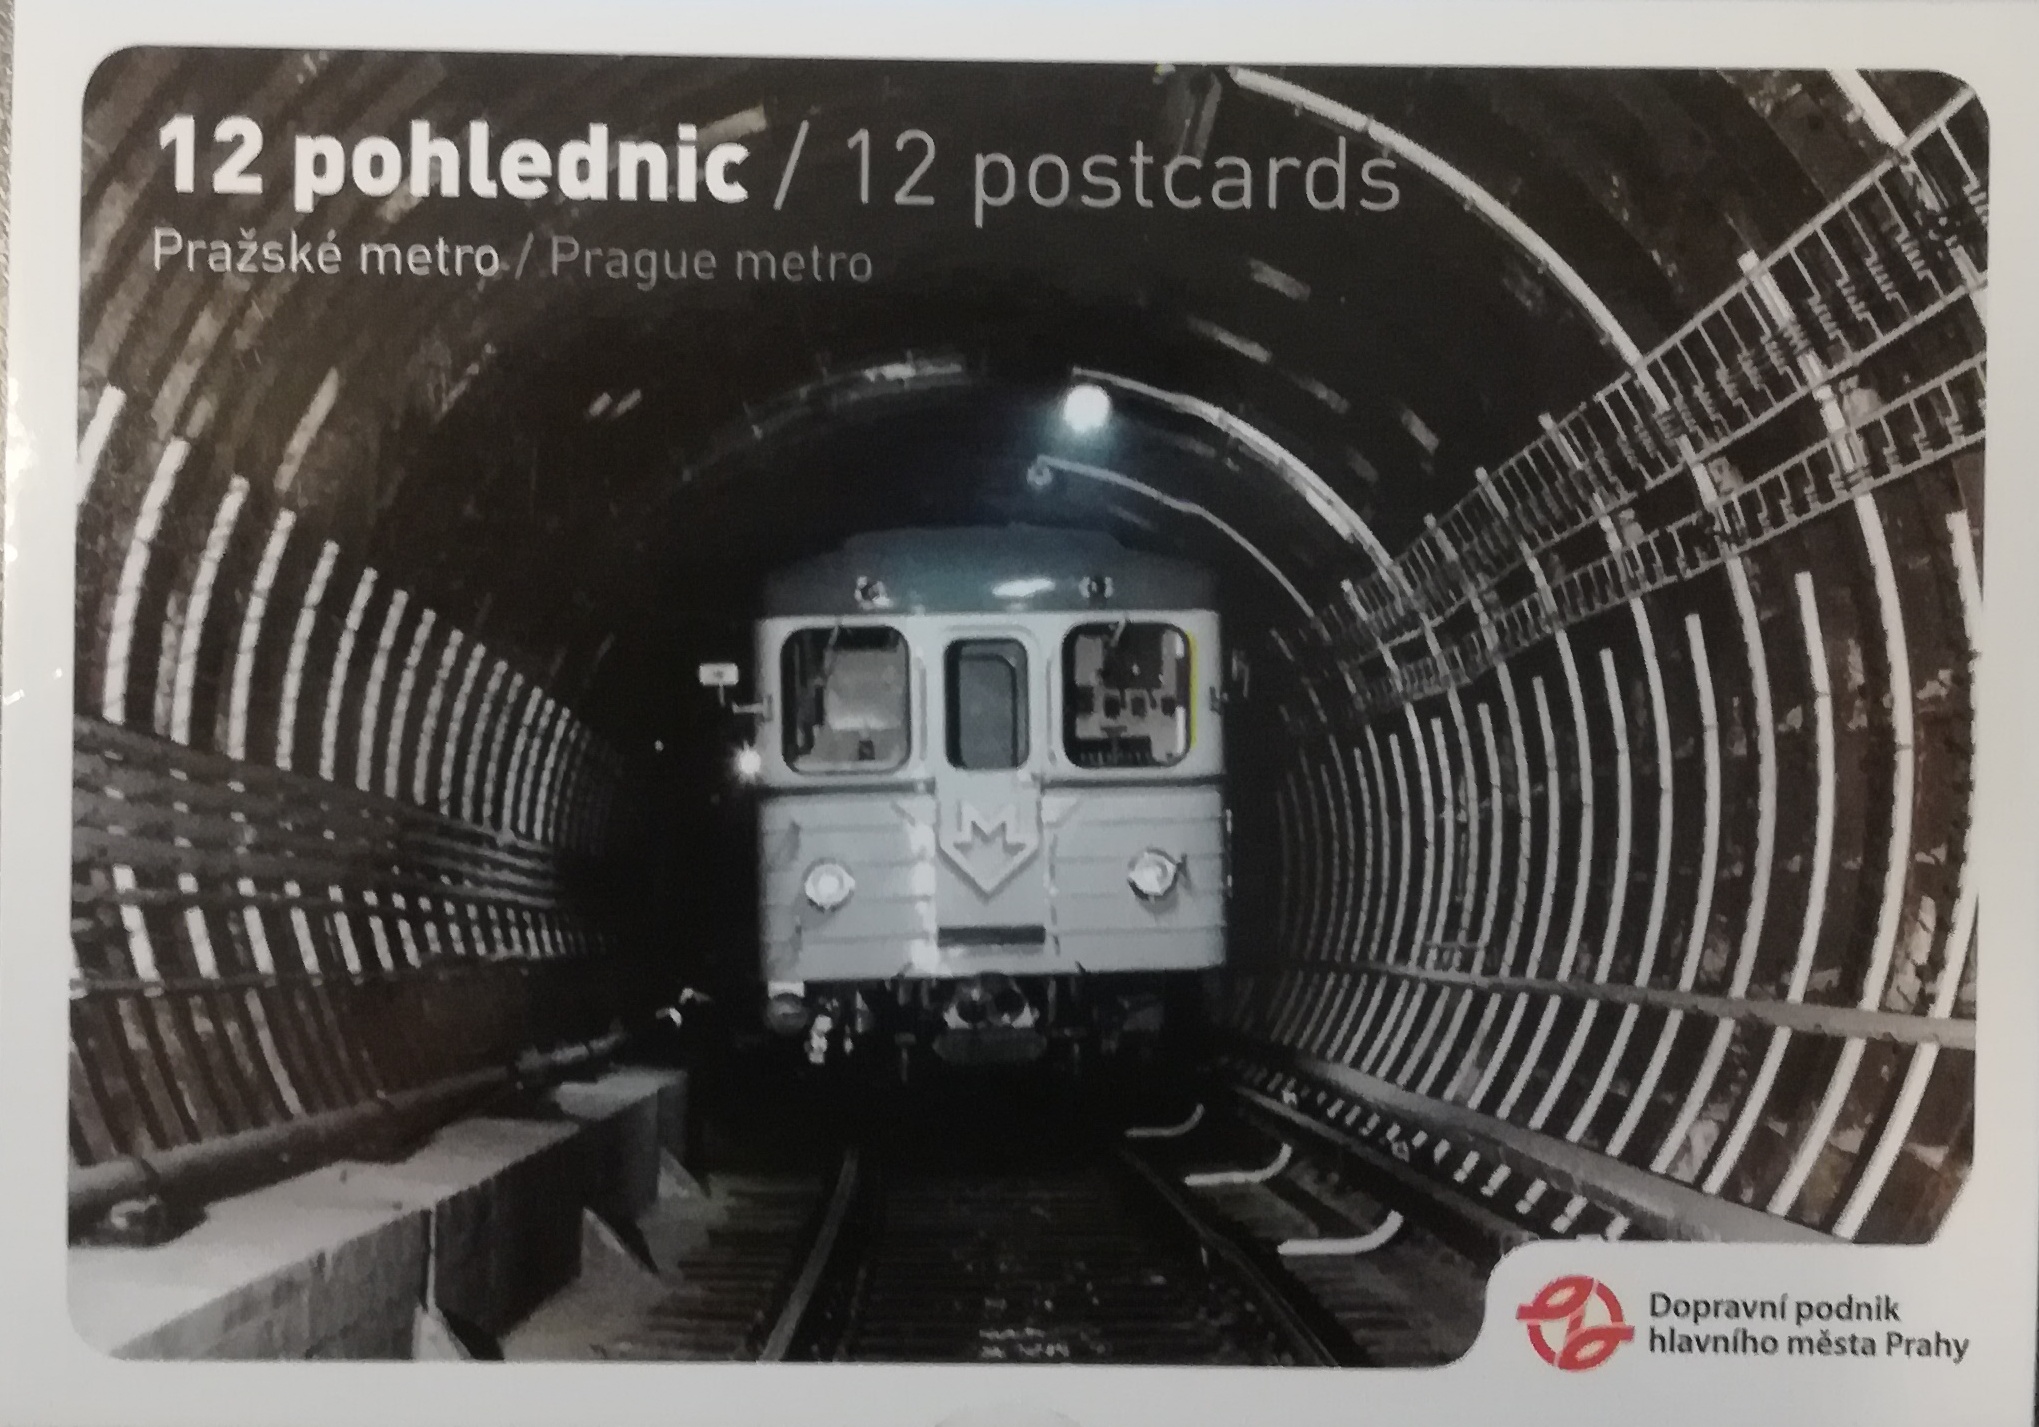 12 pohlednic - Prask metro